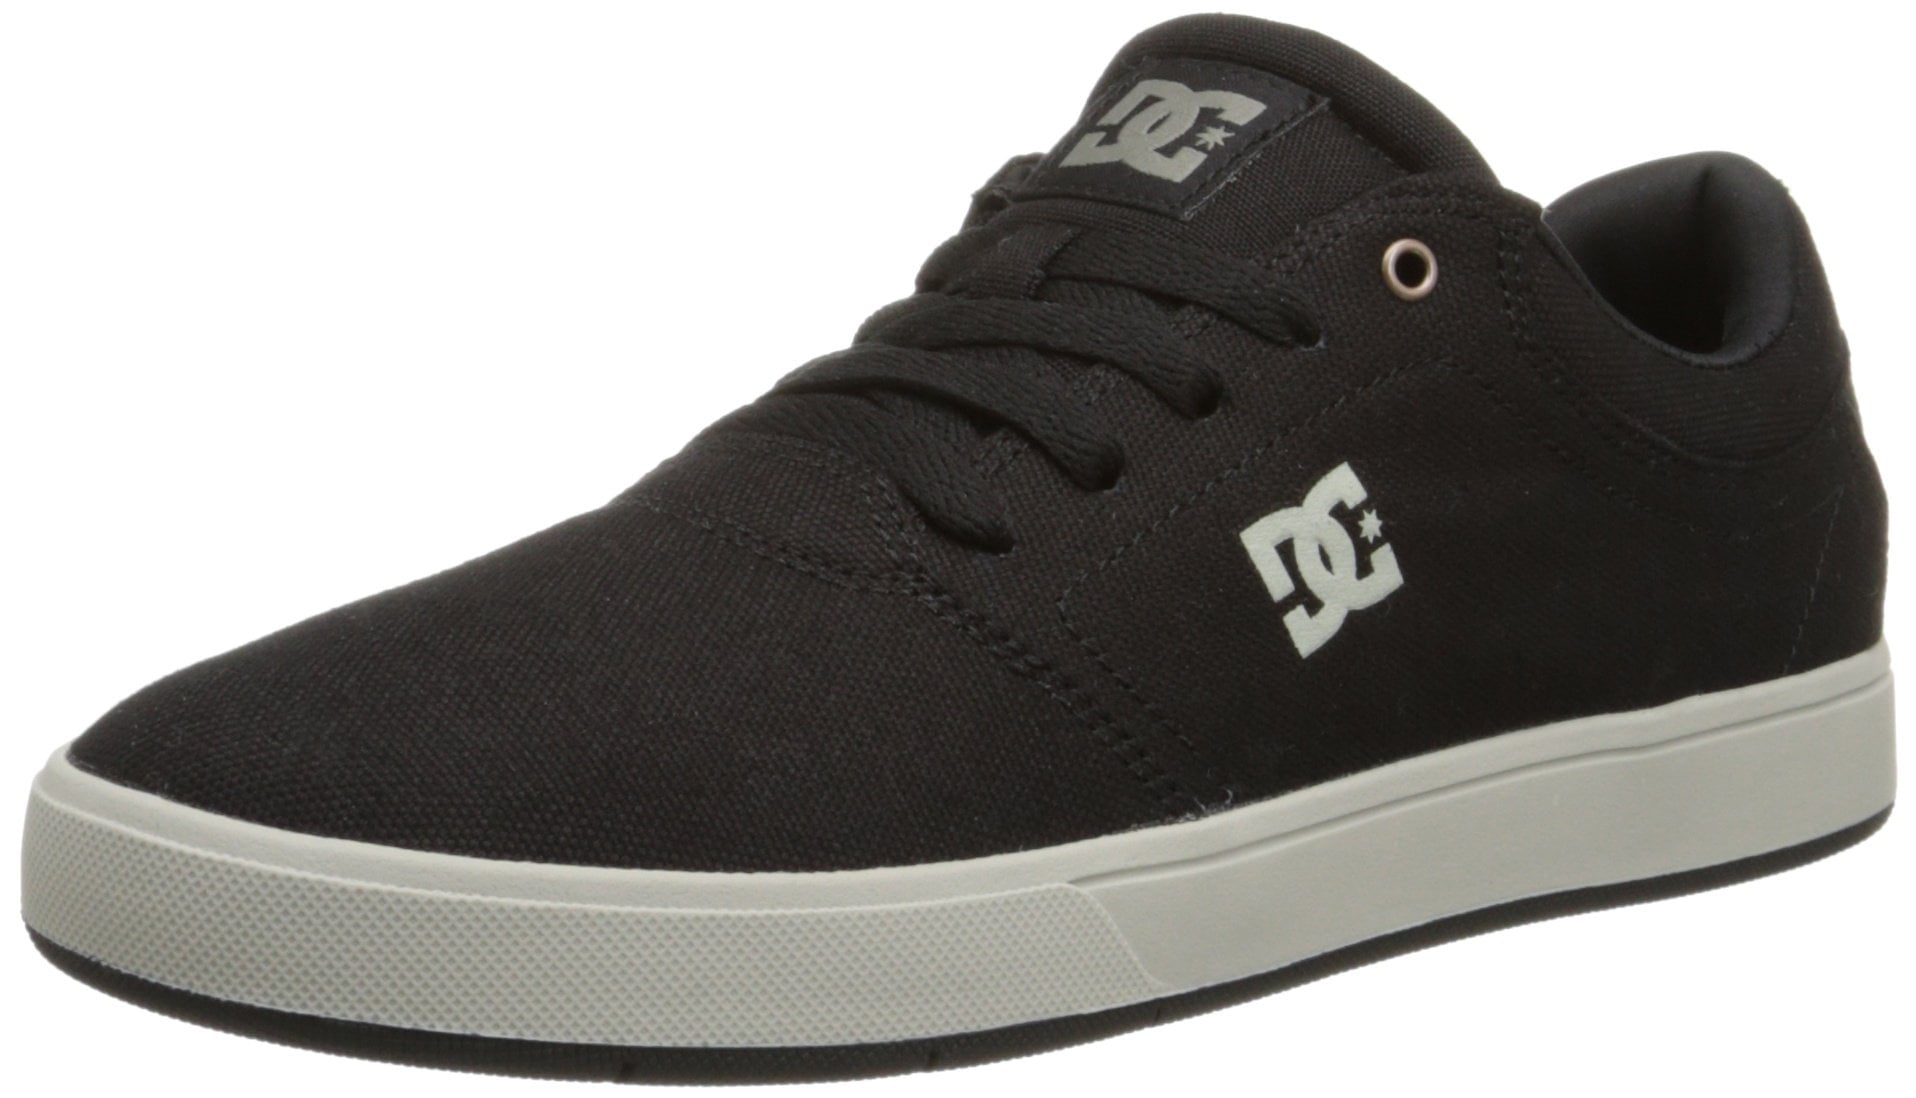 DC Men's Crisis TX Skateboarding Shoes Black/Armor - Walmart.com